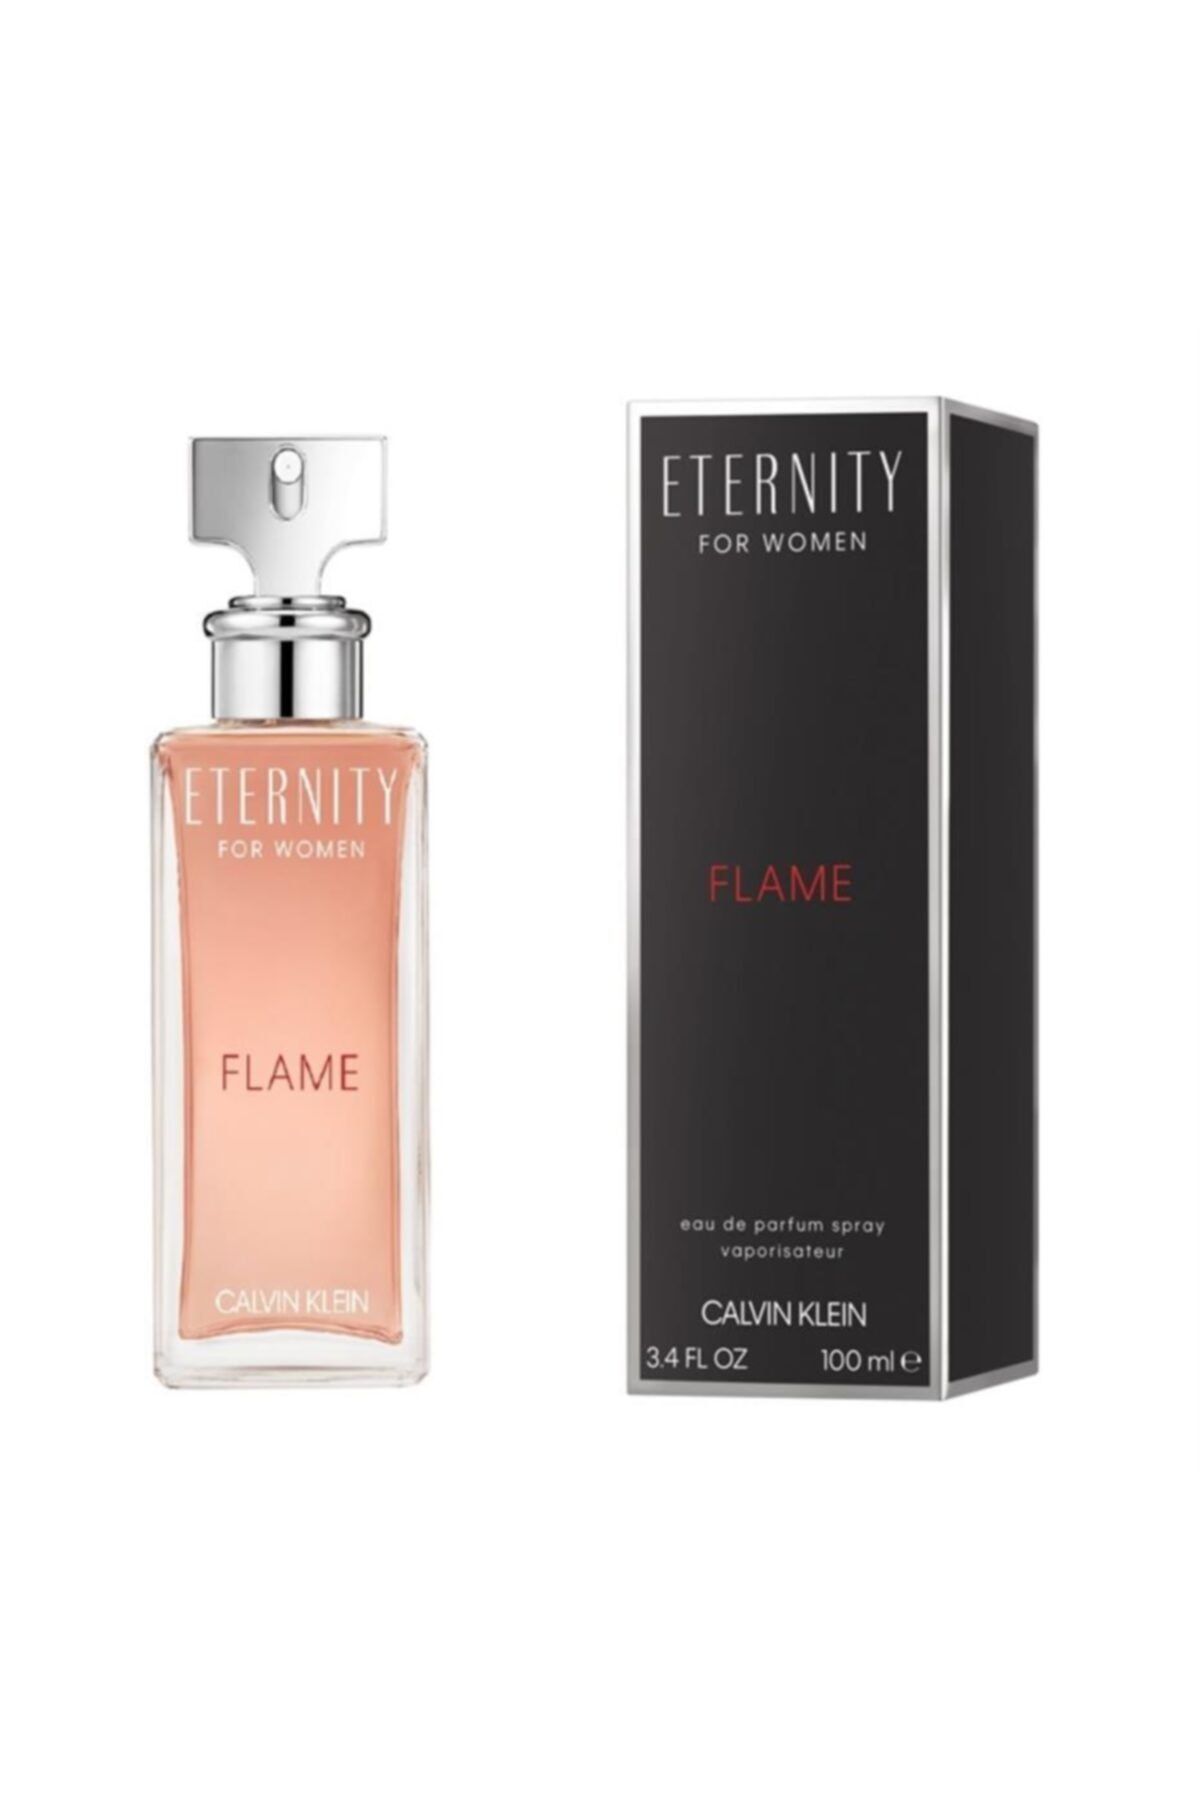 Calvin Klein Eternity Flame ادوپرفیوم 100 ml عطر زنانه